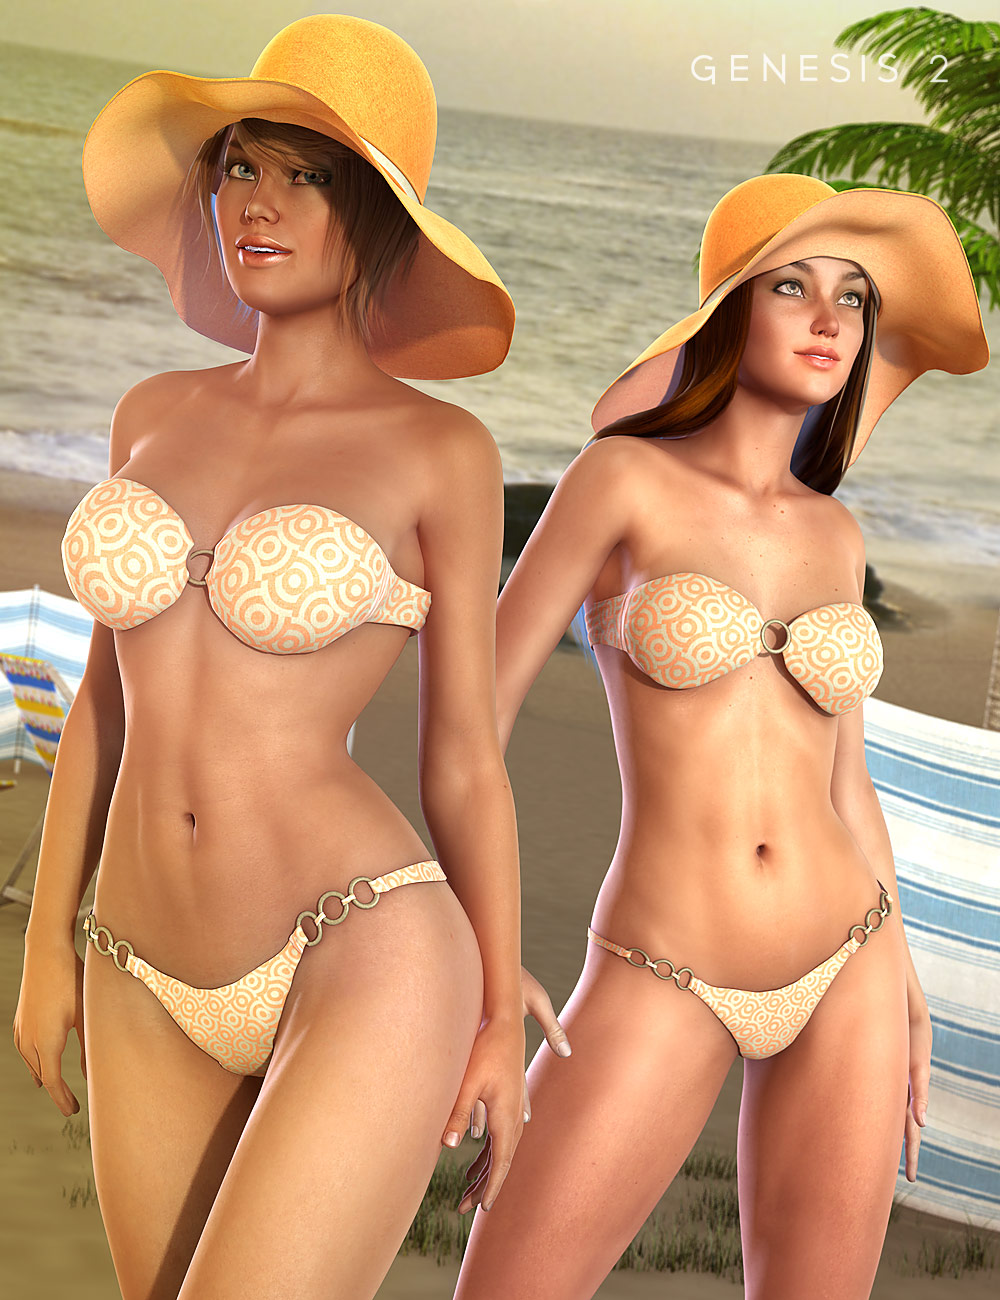 Ring Bikini and Sun Hat for Genesis 2 Female(s) by: Barbara BrundonSarsa, 3D Models by Daz 3D